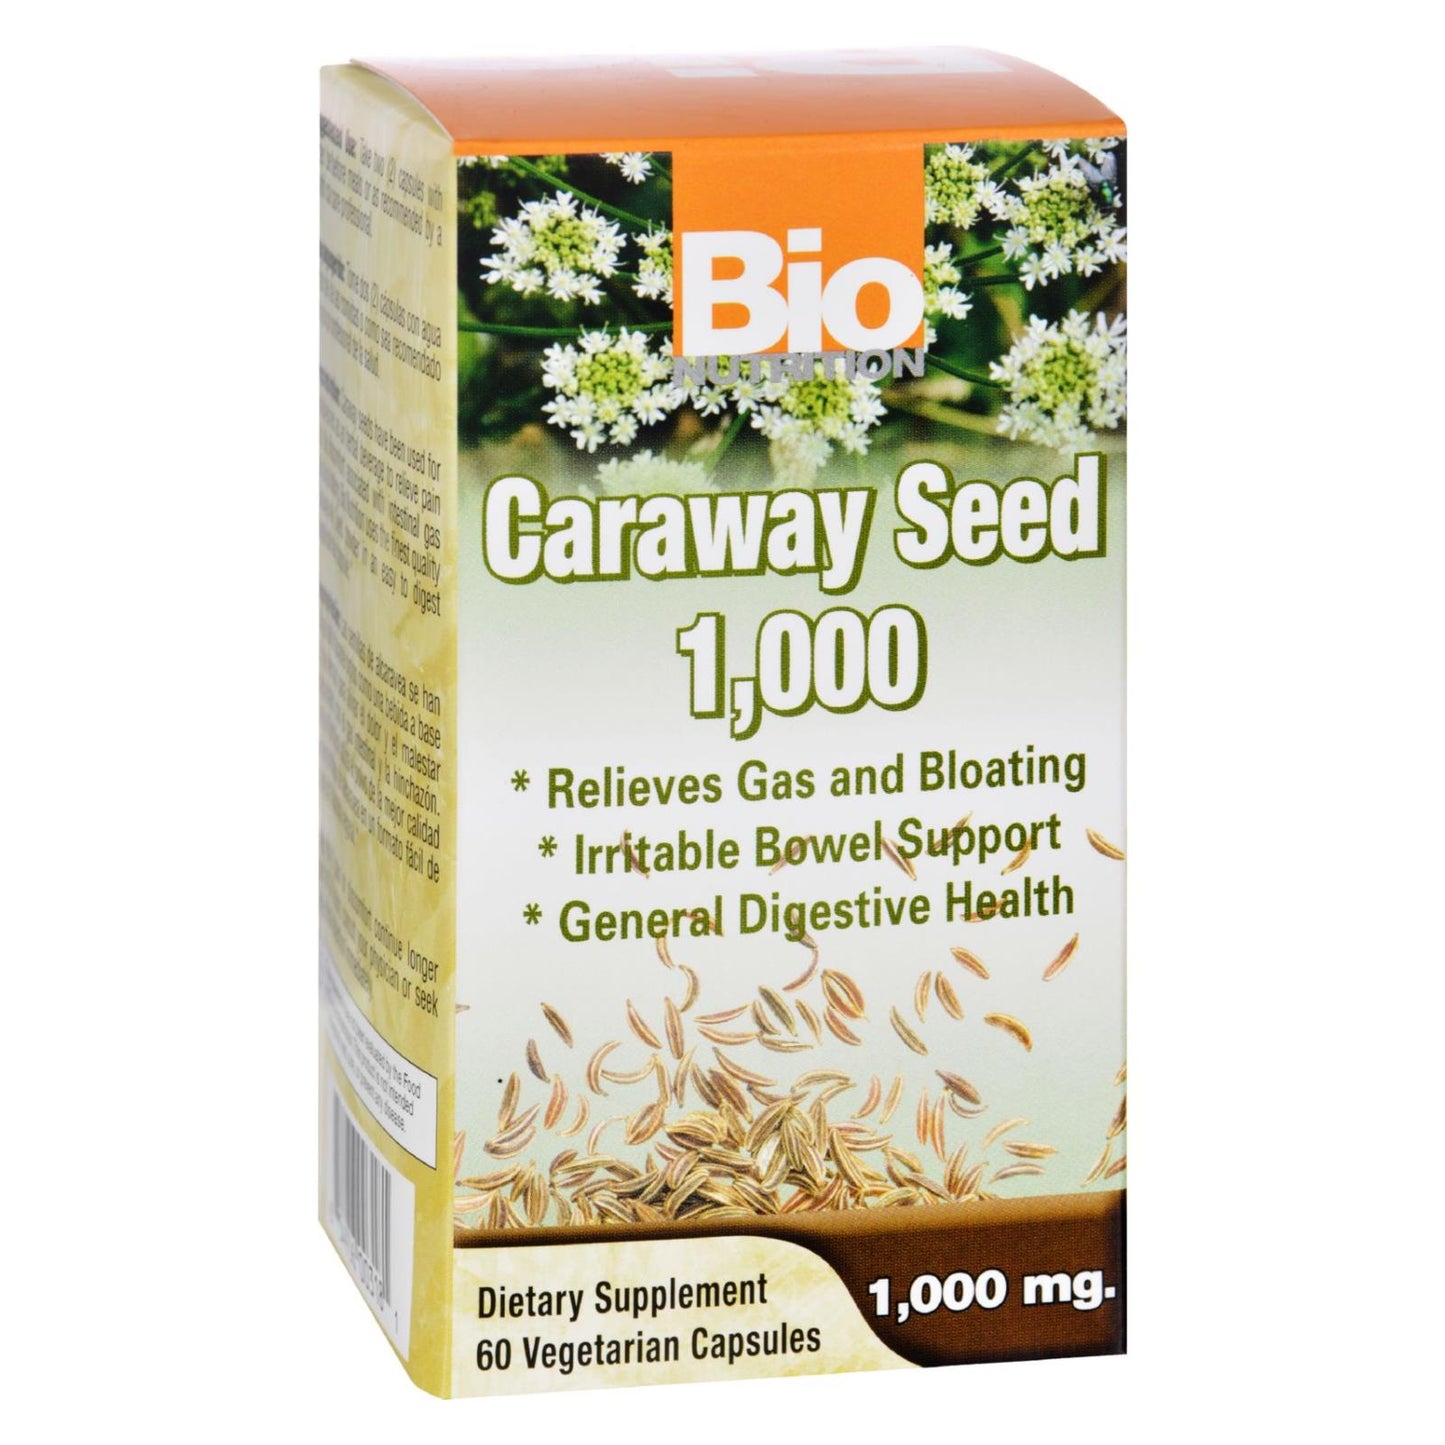 Bio Nutrition - Caraway Seed 1 000 Mg - 1000 Mg - 60 Vegetarian Capsules